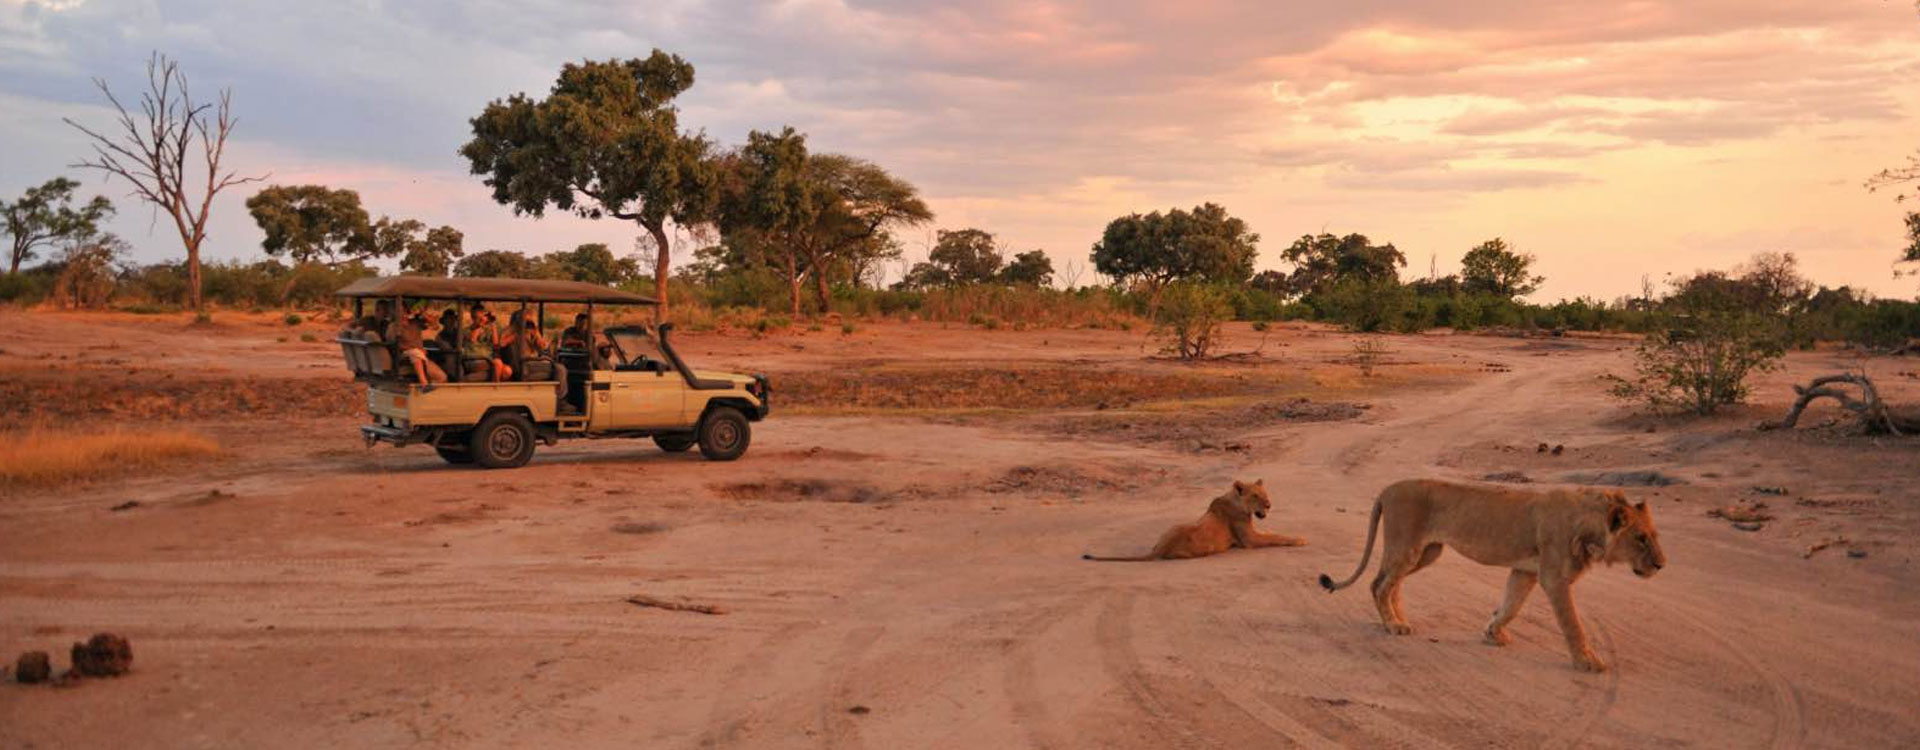 10 Days Exploring Paths Less Travelled Safari Tour